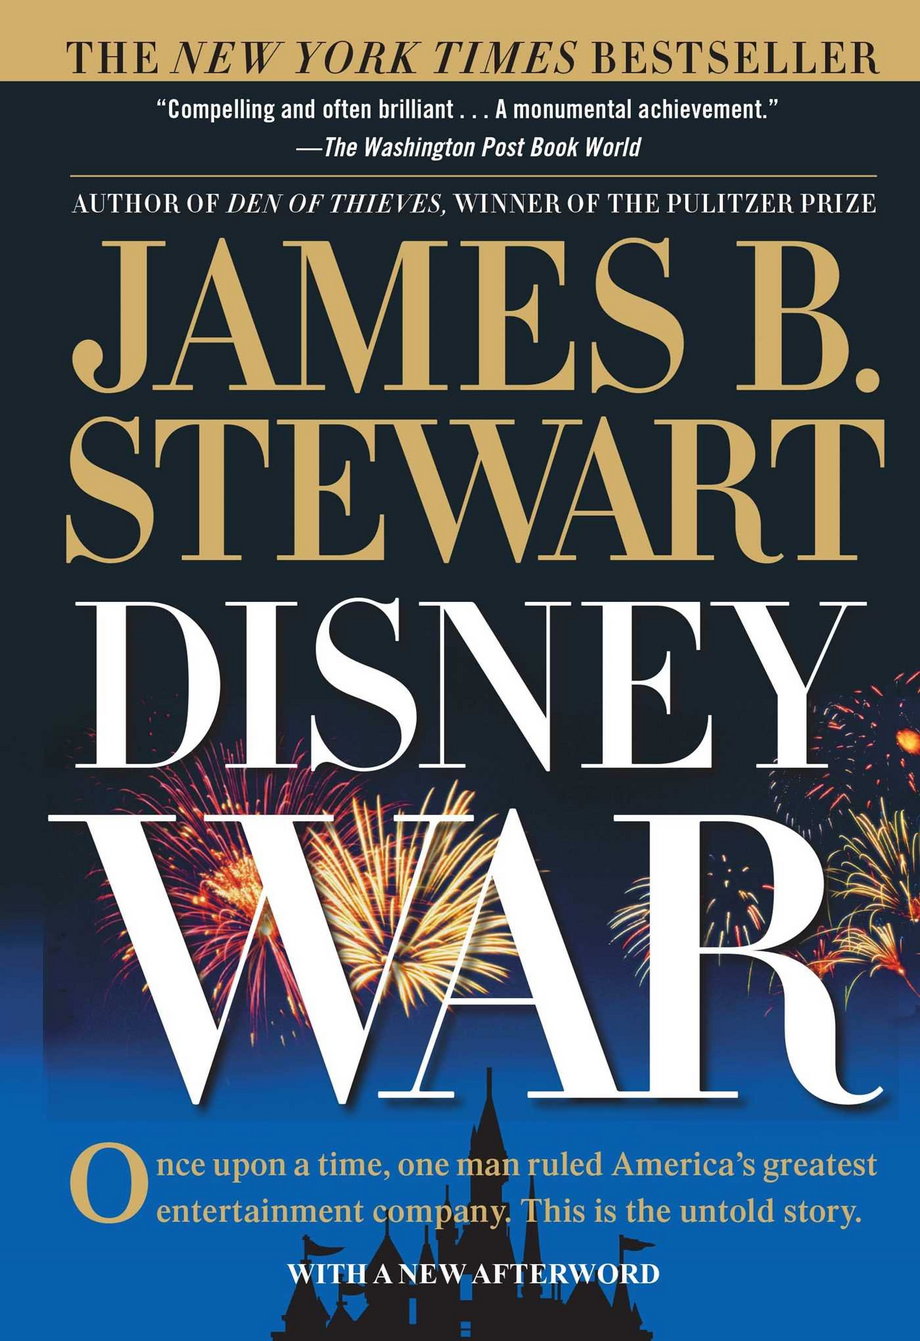 'DisneyWar' by James Stewart